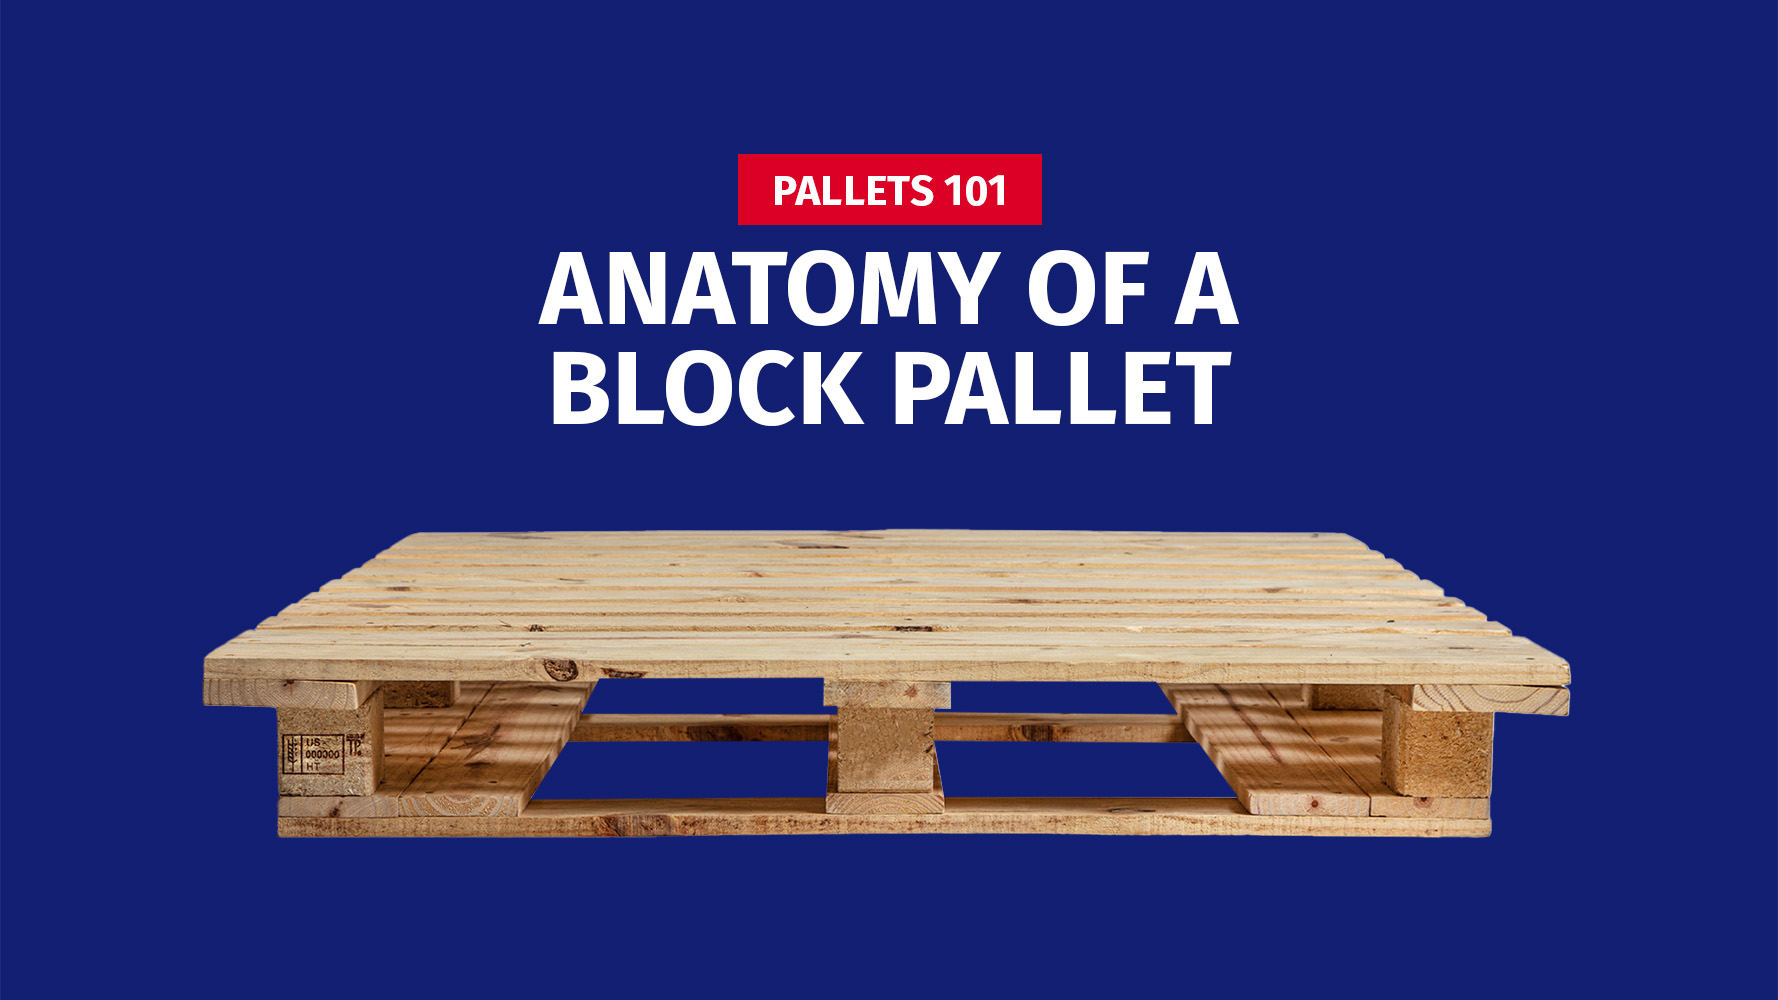 A diagram of a block pallet